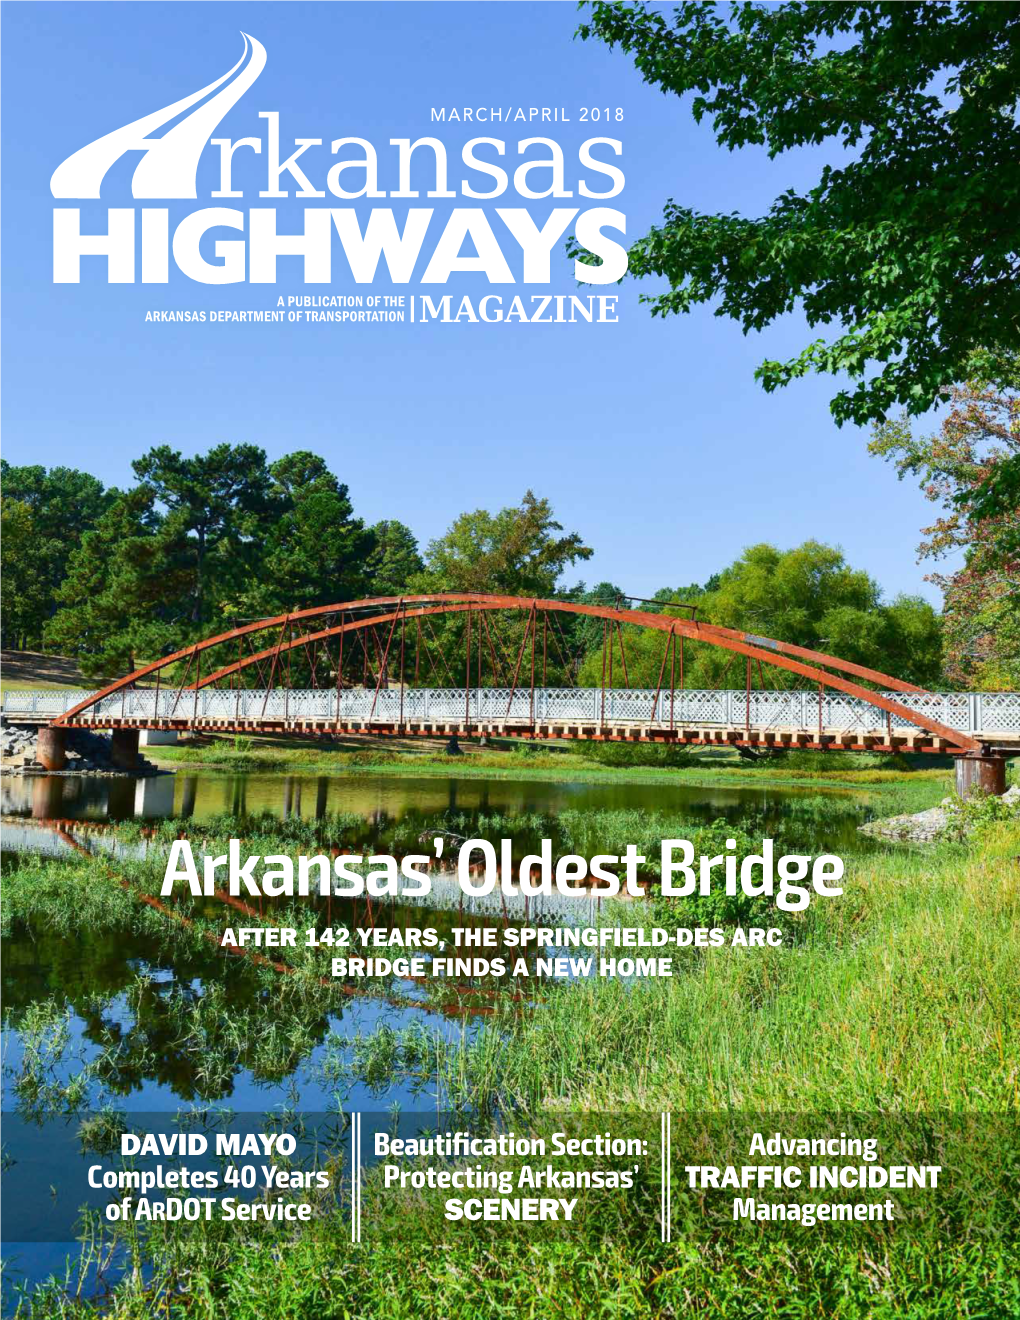 Arkansas' Oldest Bridge